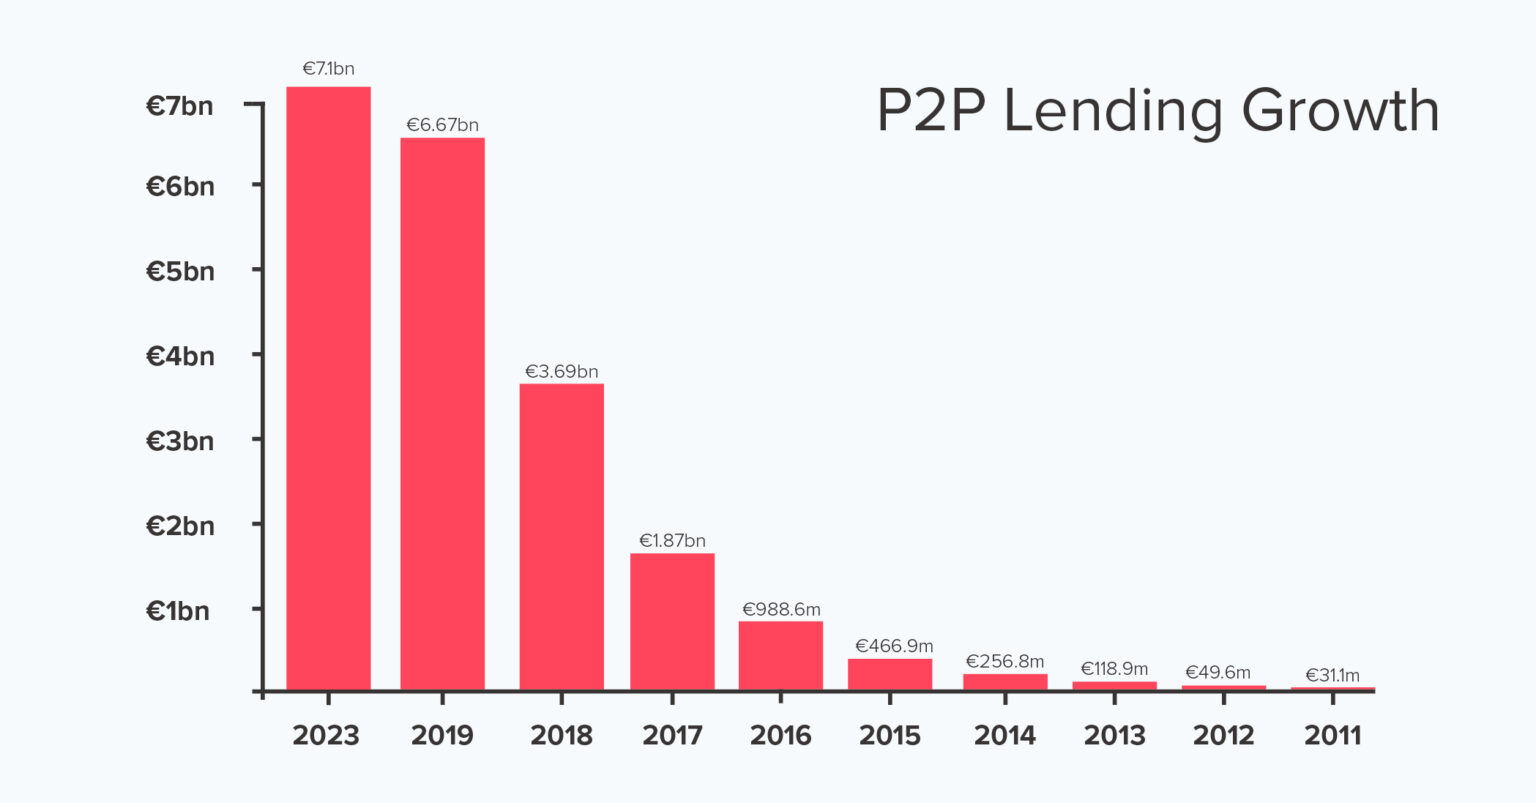 P2P Lending Growth